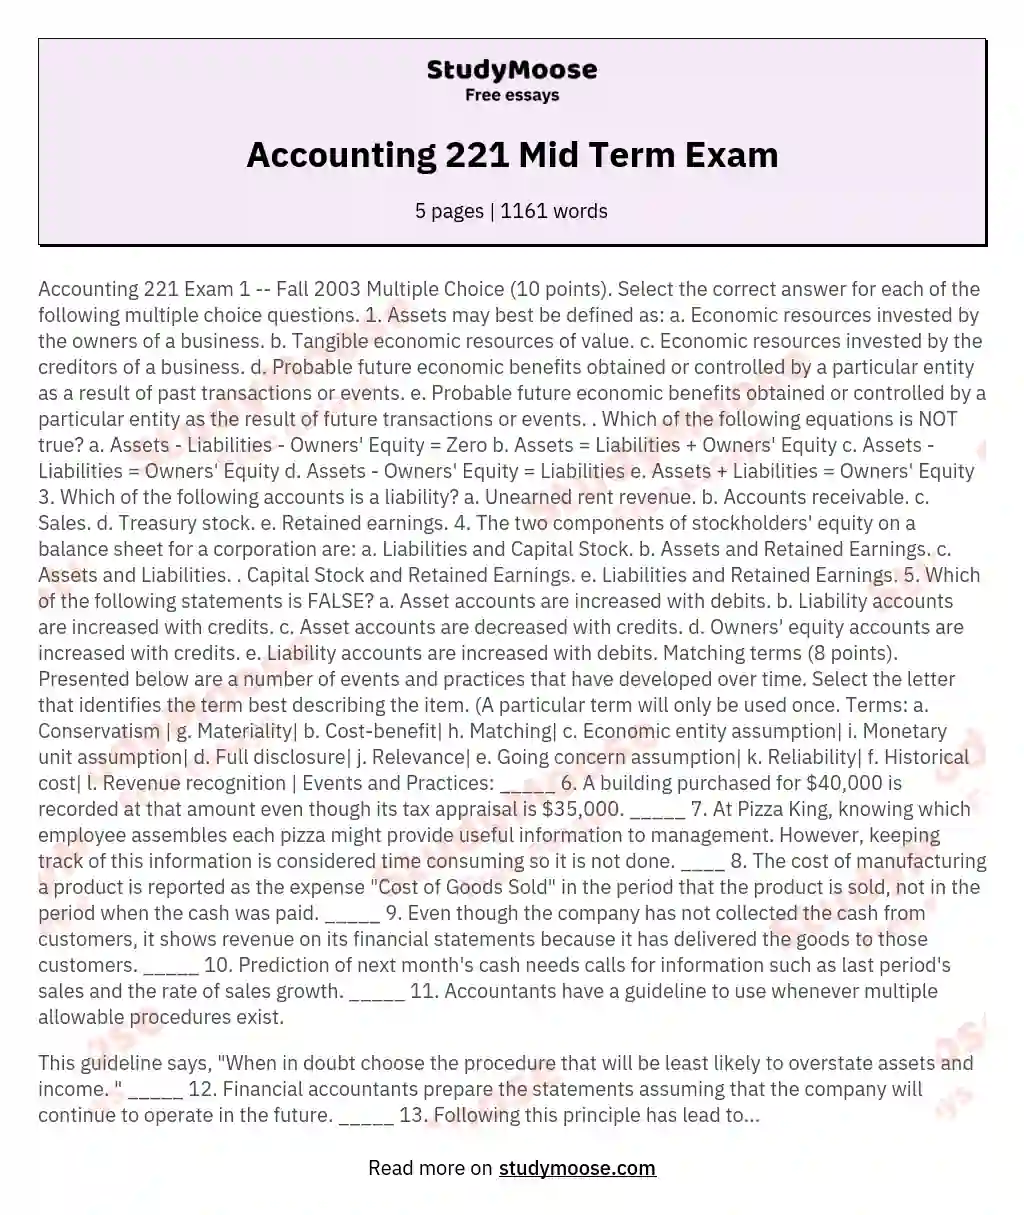 Accounting 221 Mid Term Exam essay